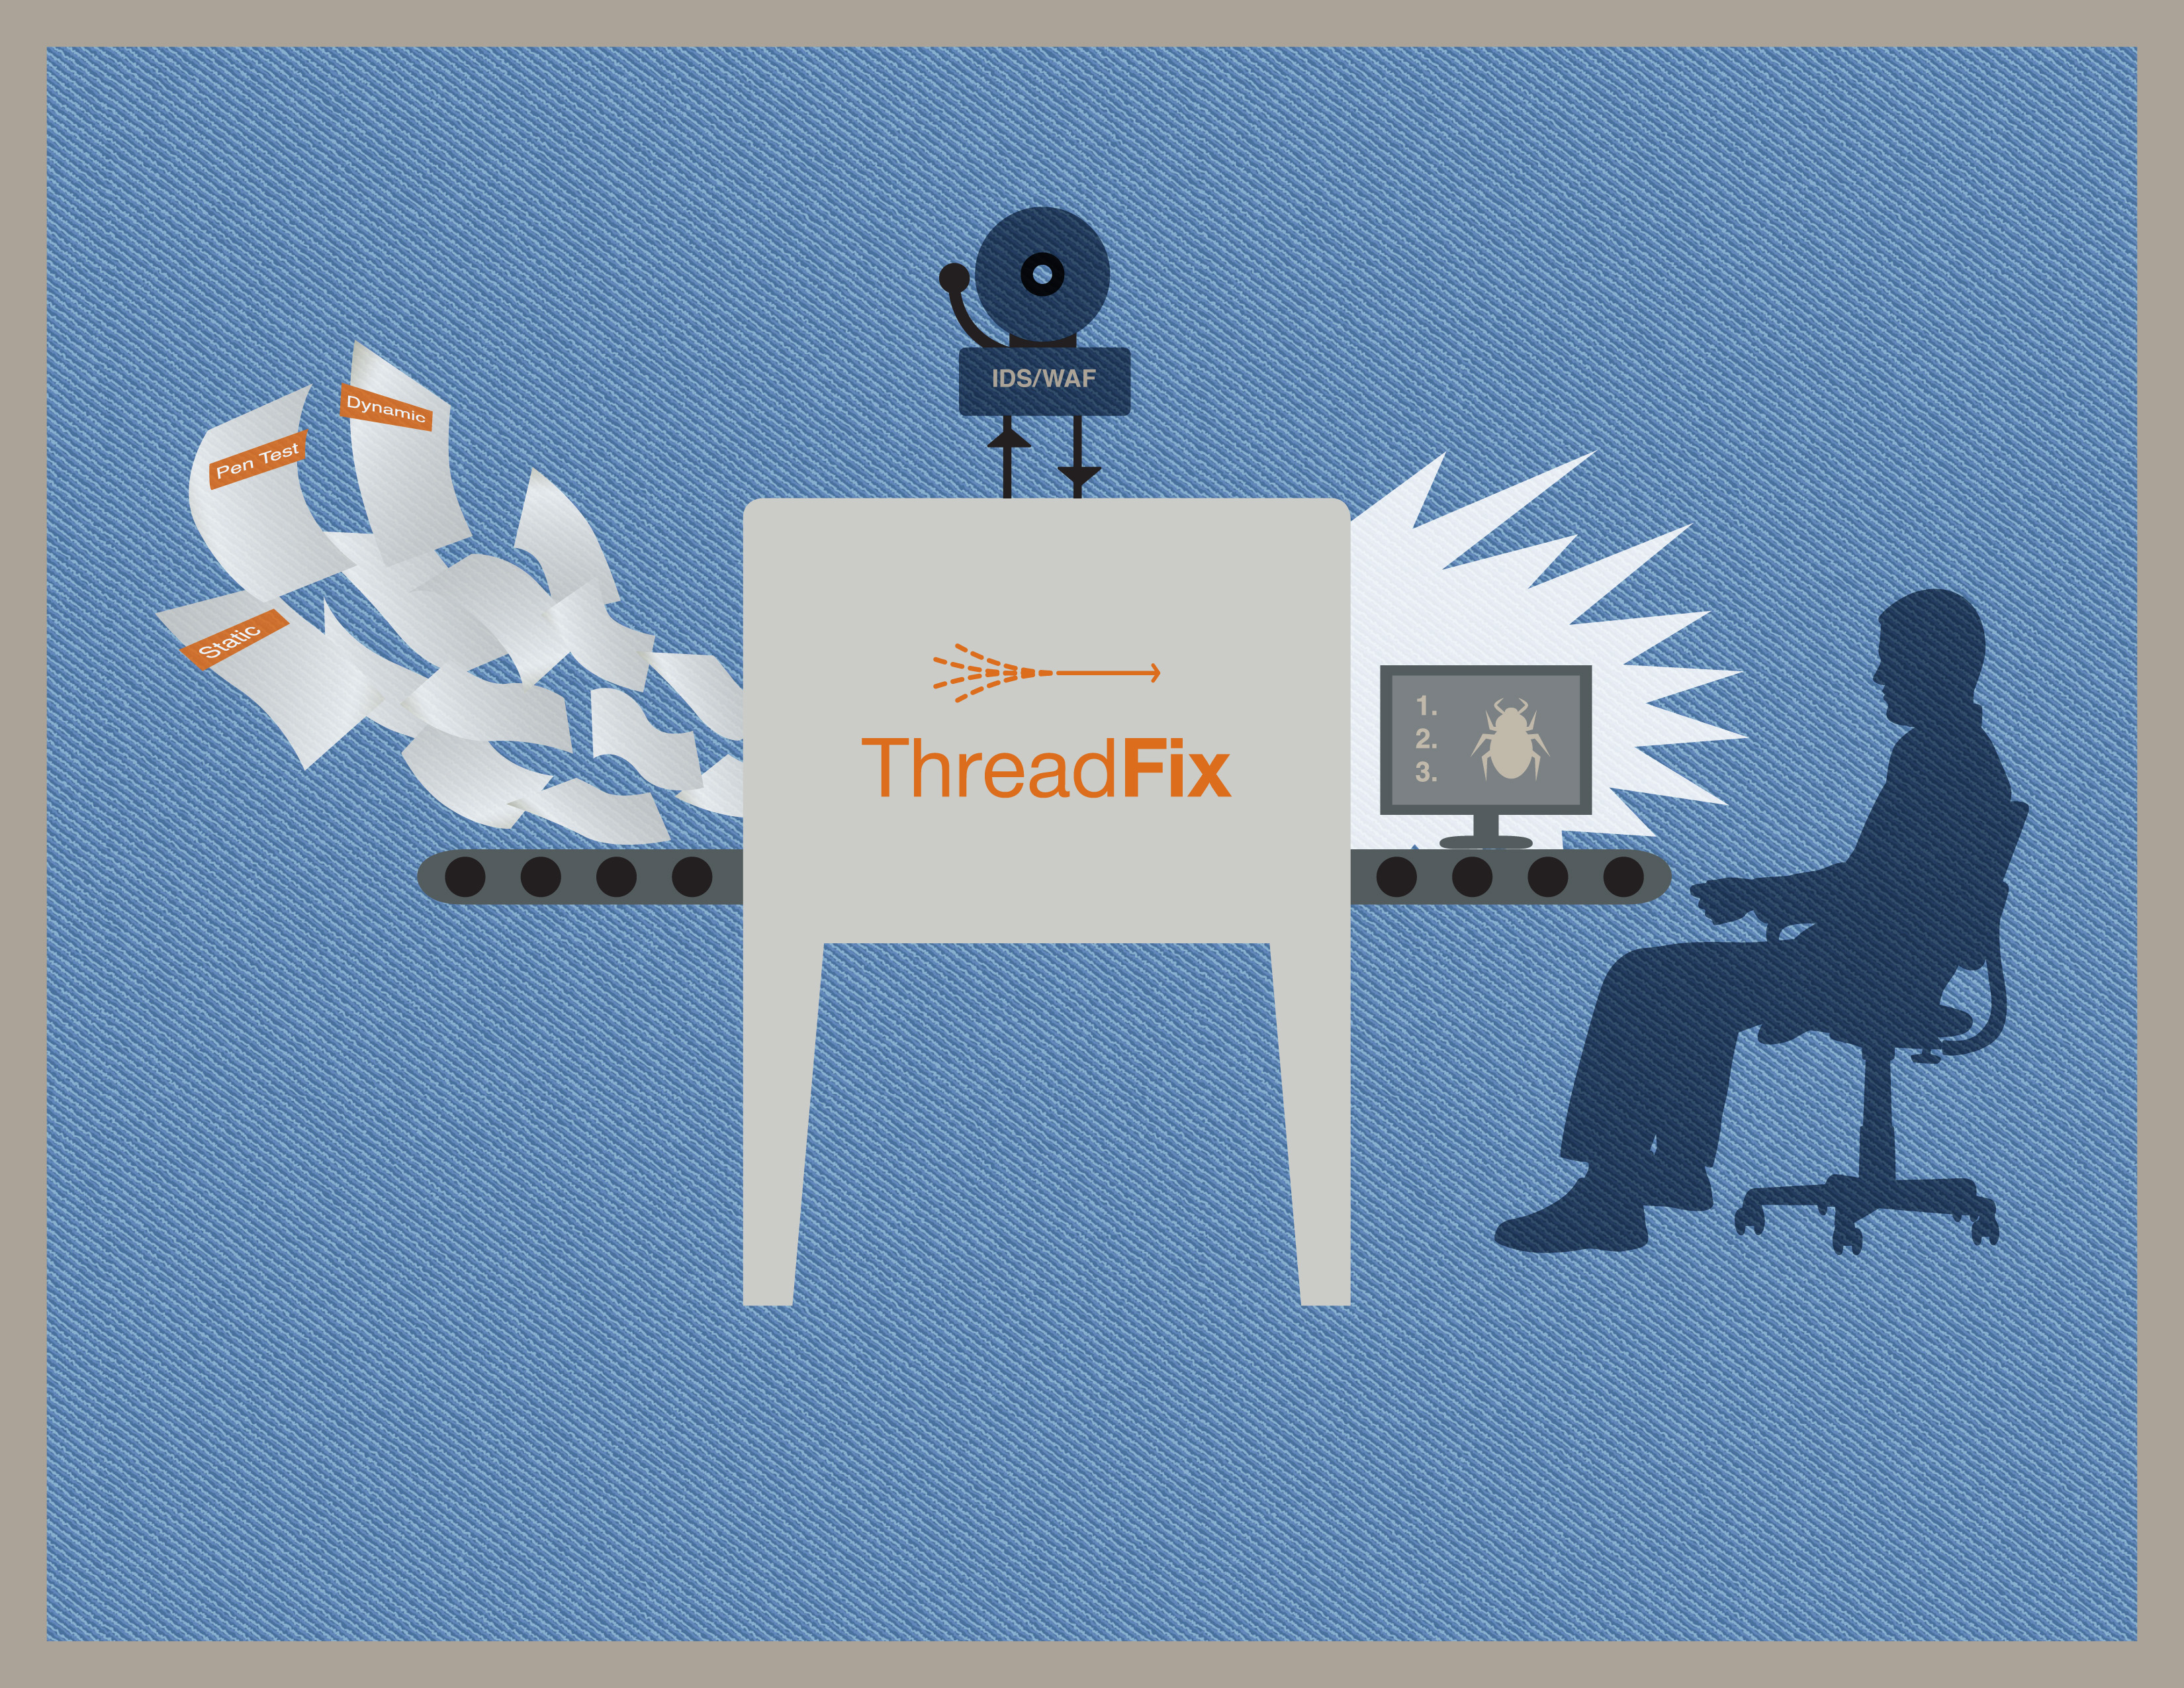 Portraying The Power of ThreadFix to De-Duplicate Scanning Reports